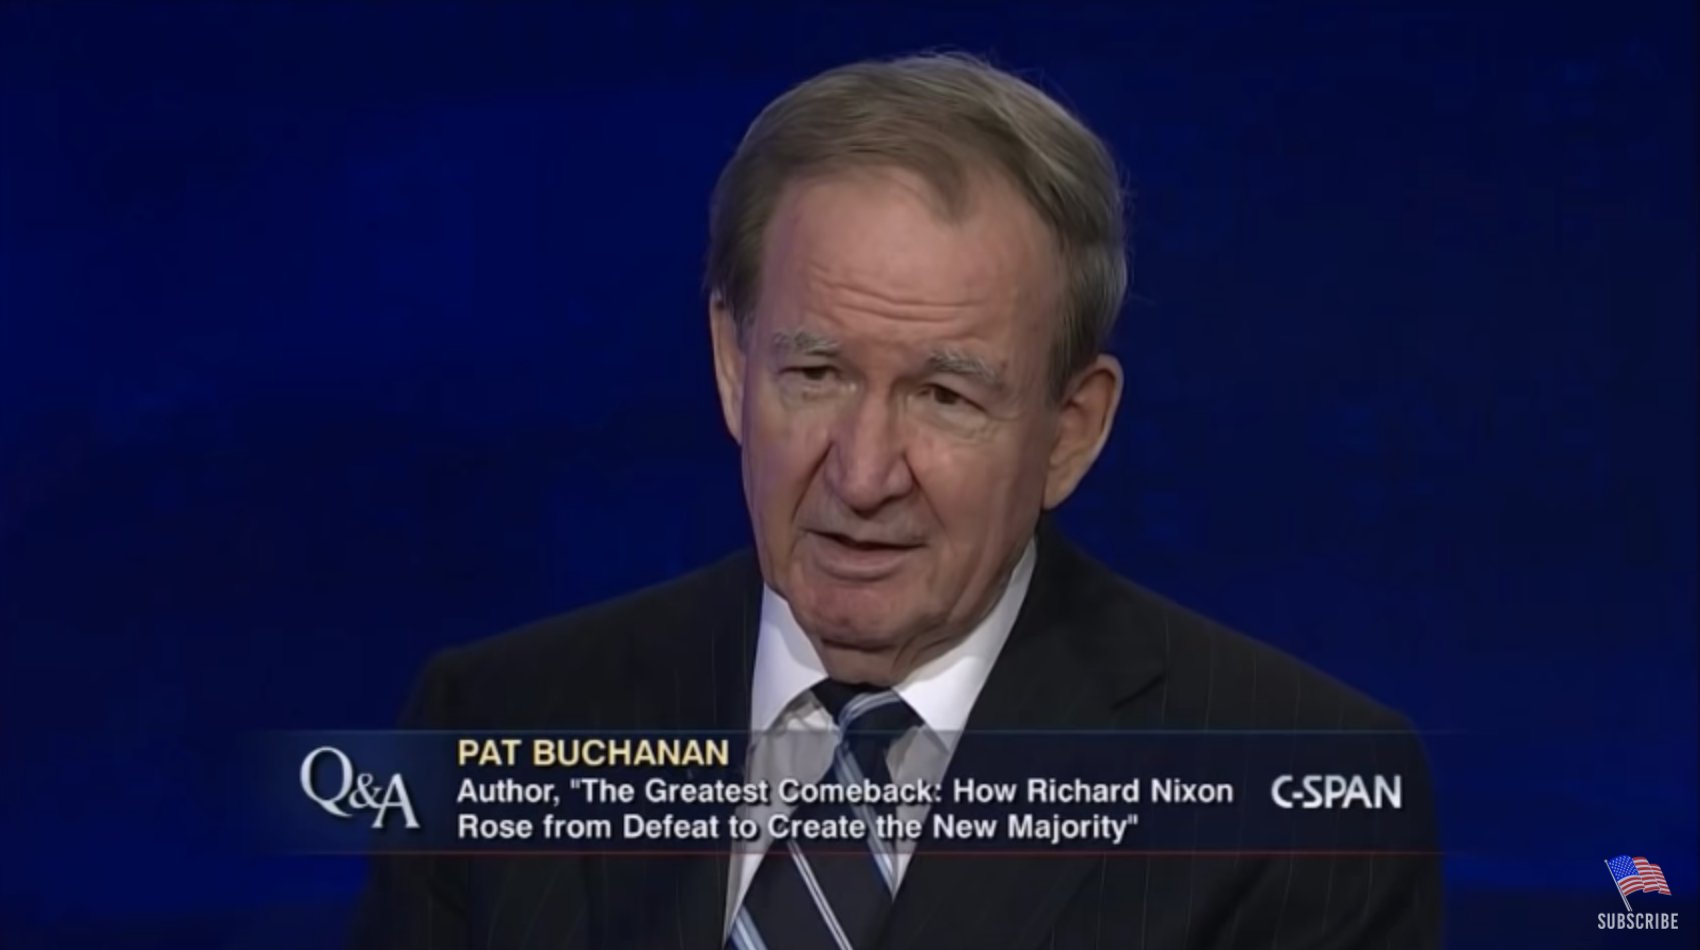 Pat Buchanan: “Bibi Netanyahu Wants The U.S. To Fight A War With Iran On Behalf Of Israel”